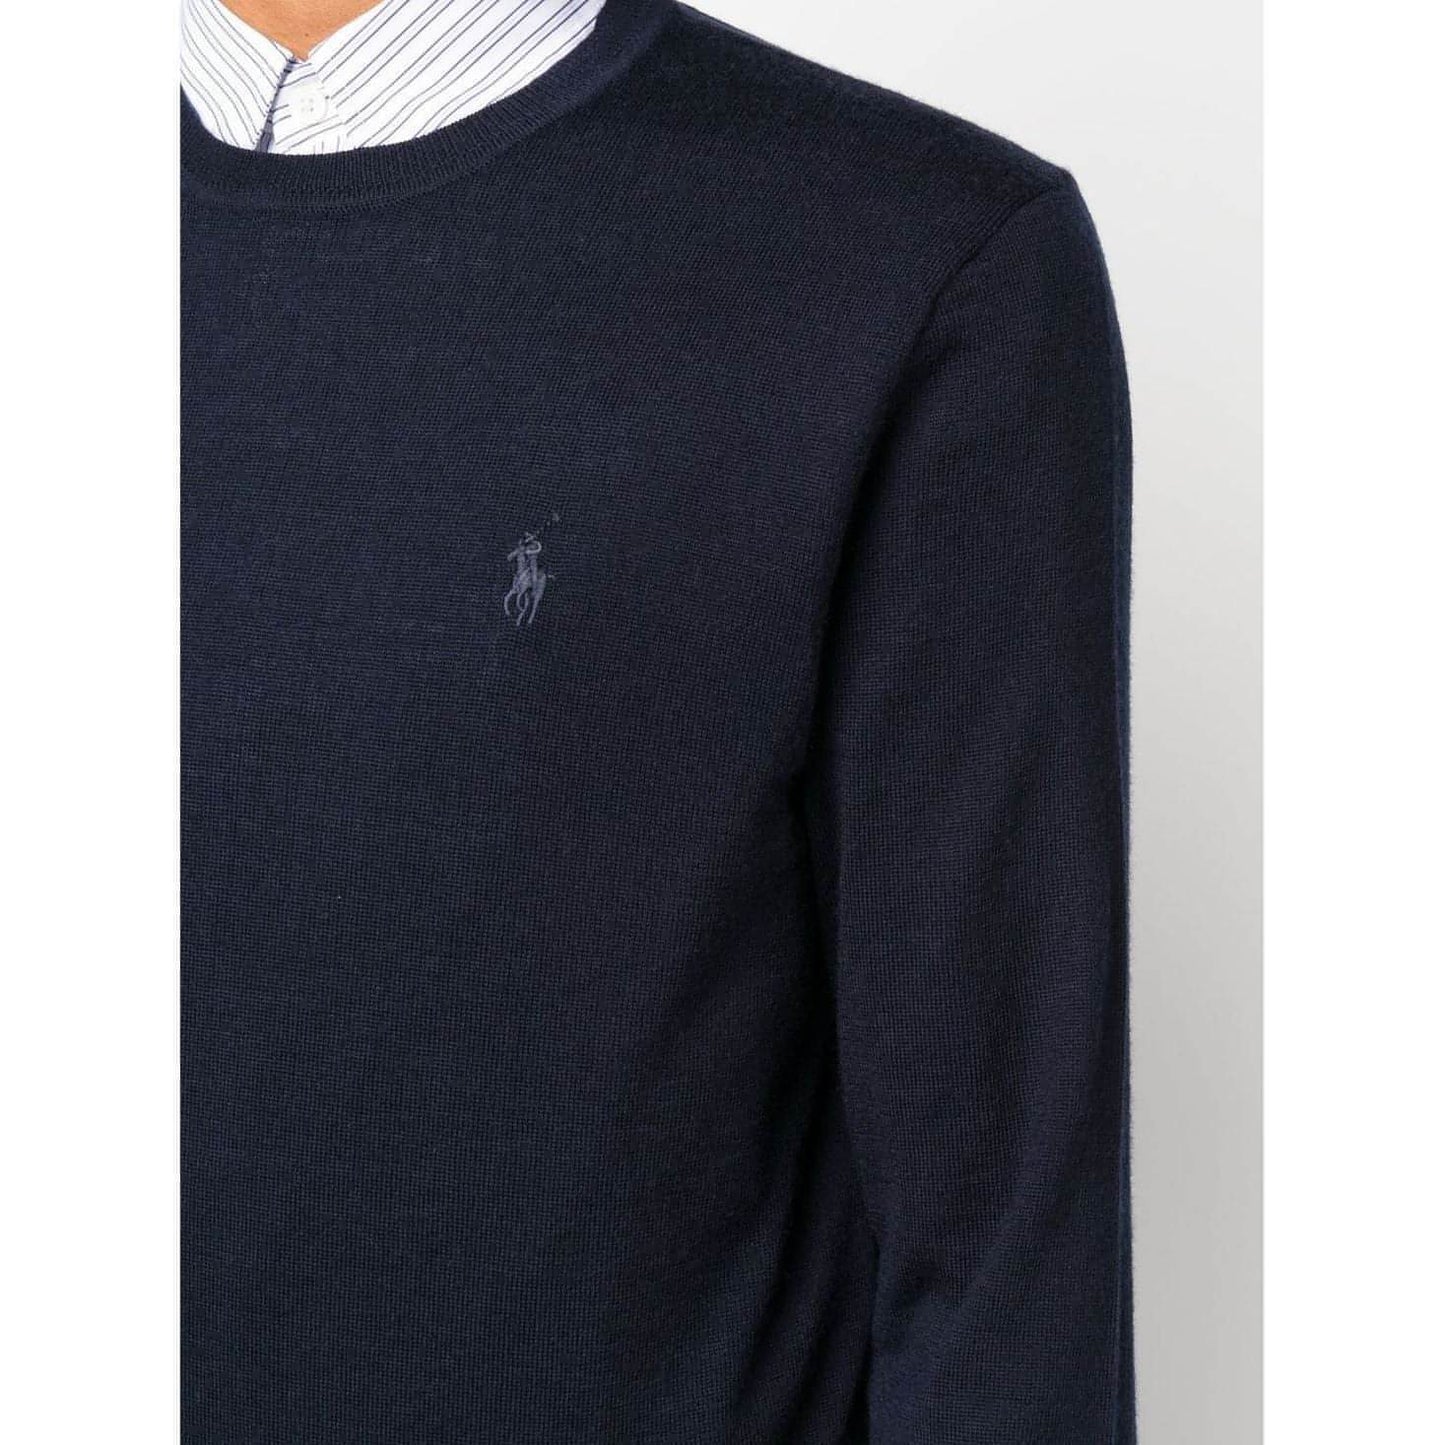 POLO RALPH LAUREN vyriškas mėlynas megztinis Long sleeve pullover